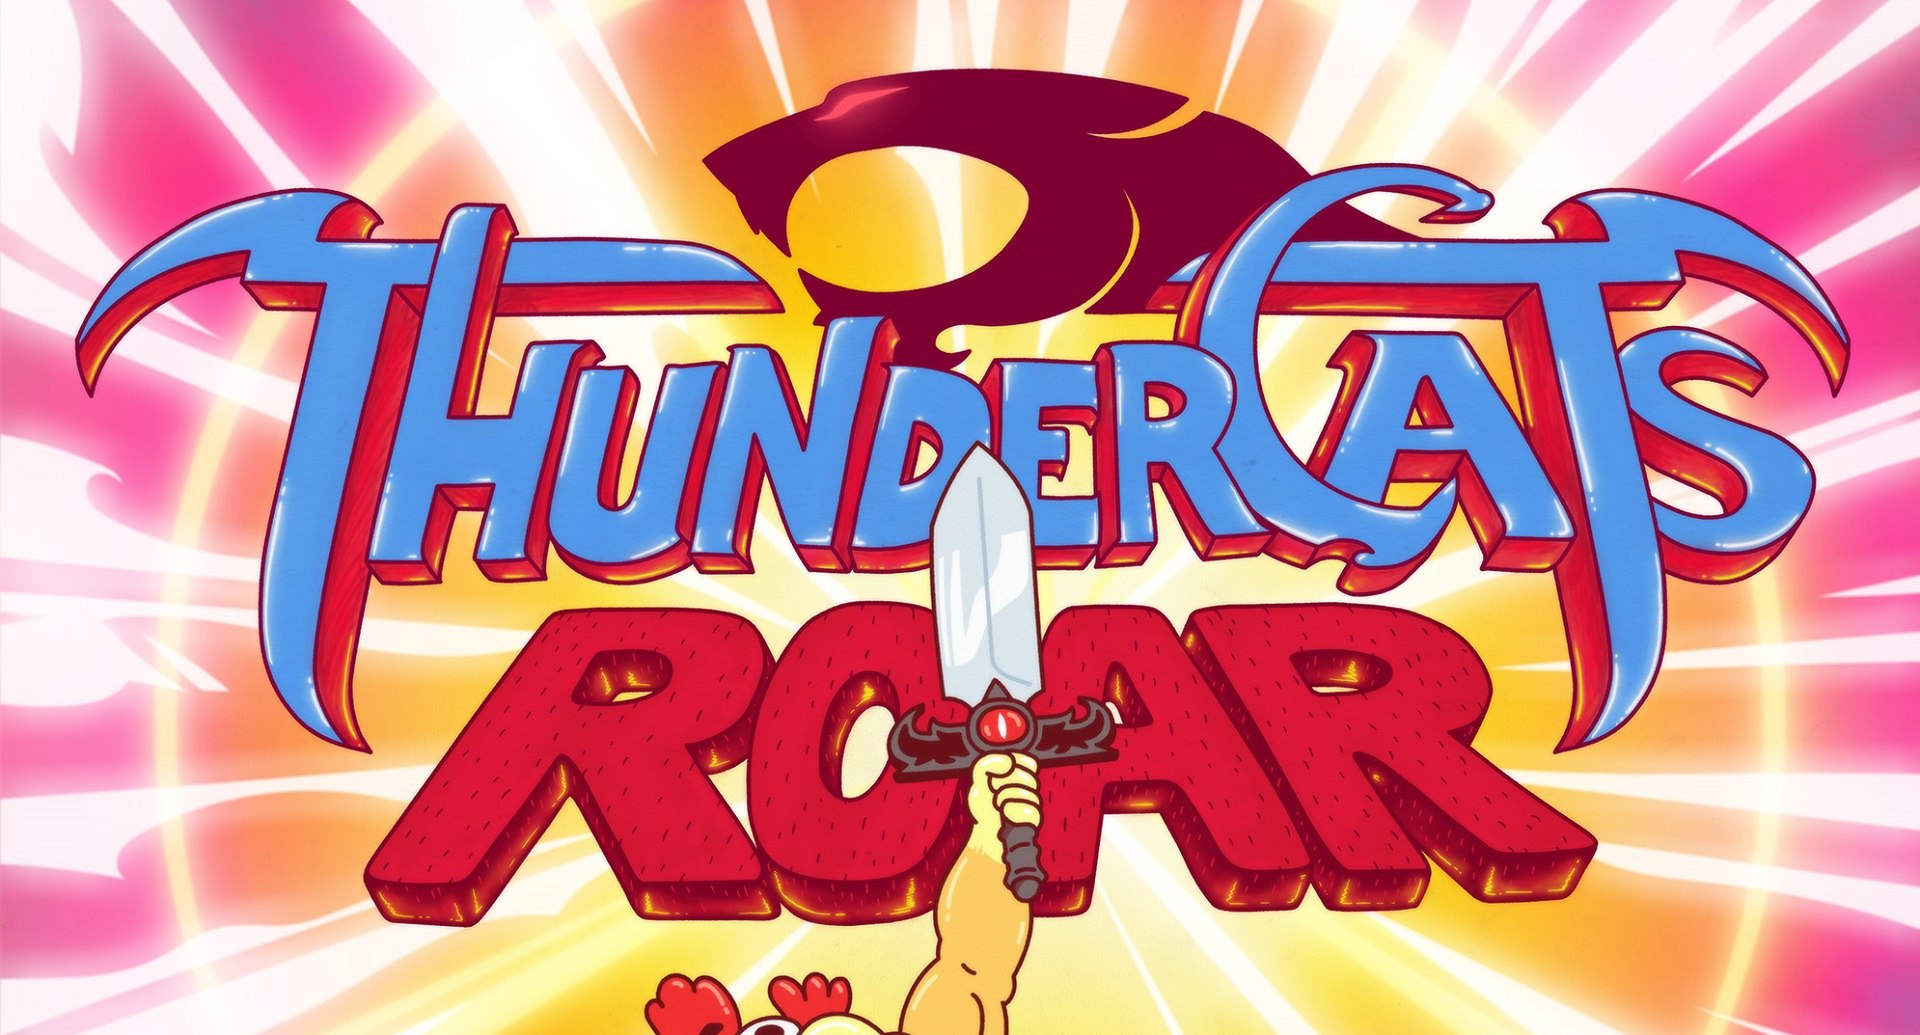 ThunderCats return in an all-new animated series ThunderCats Roar